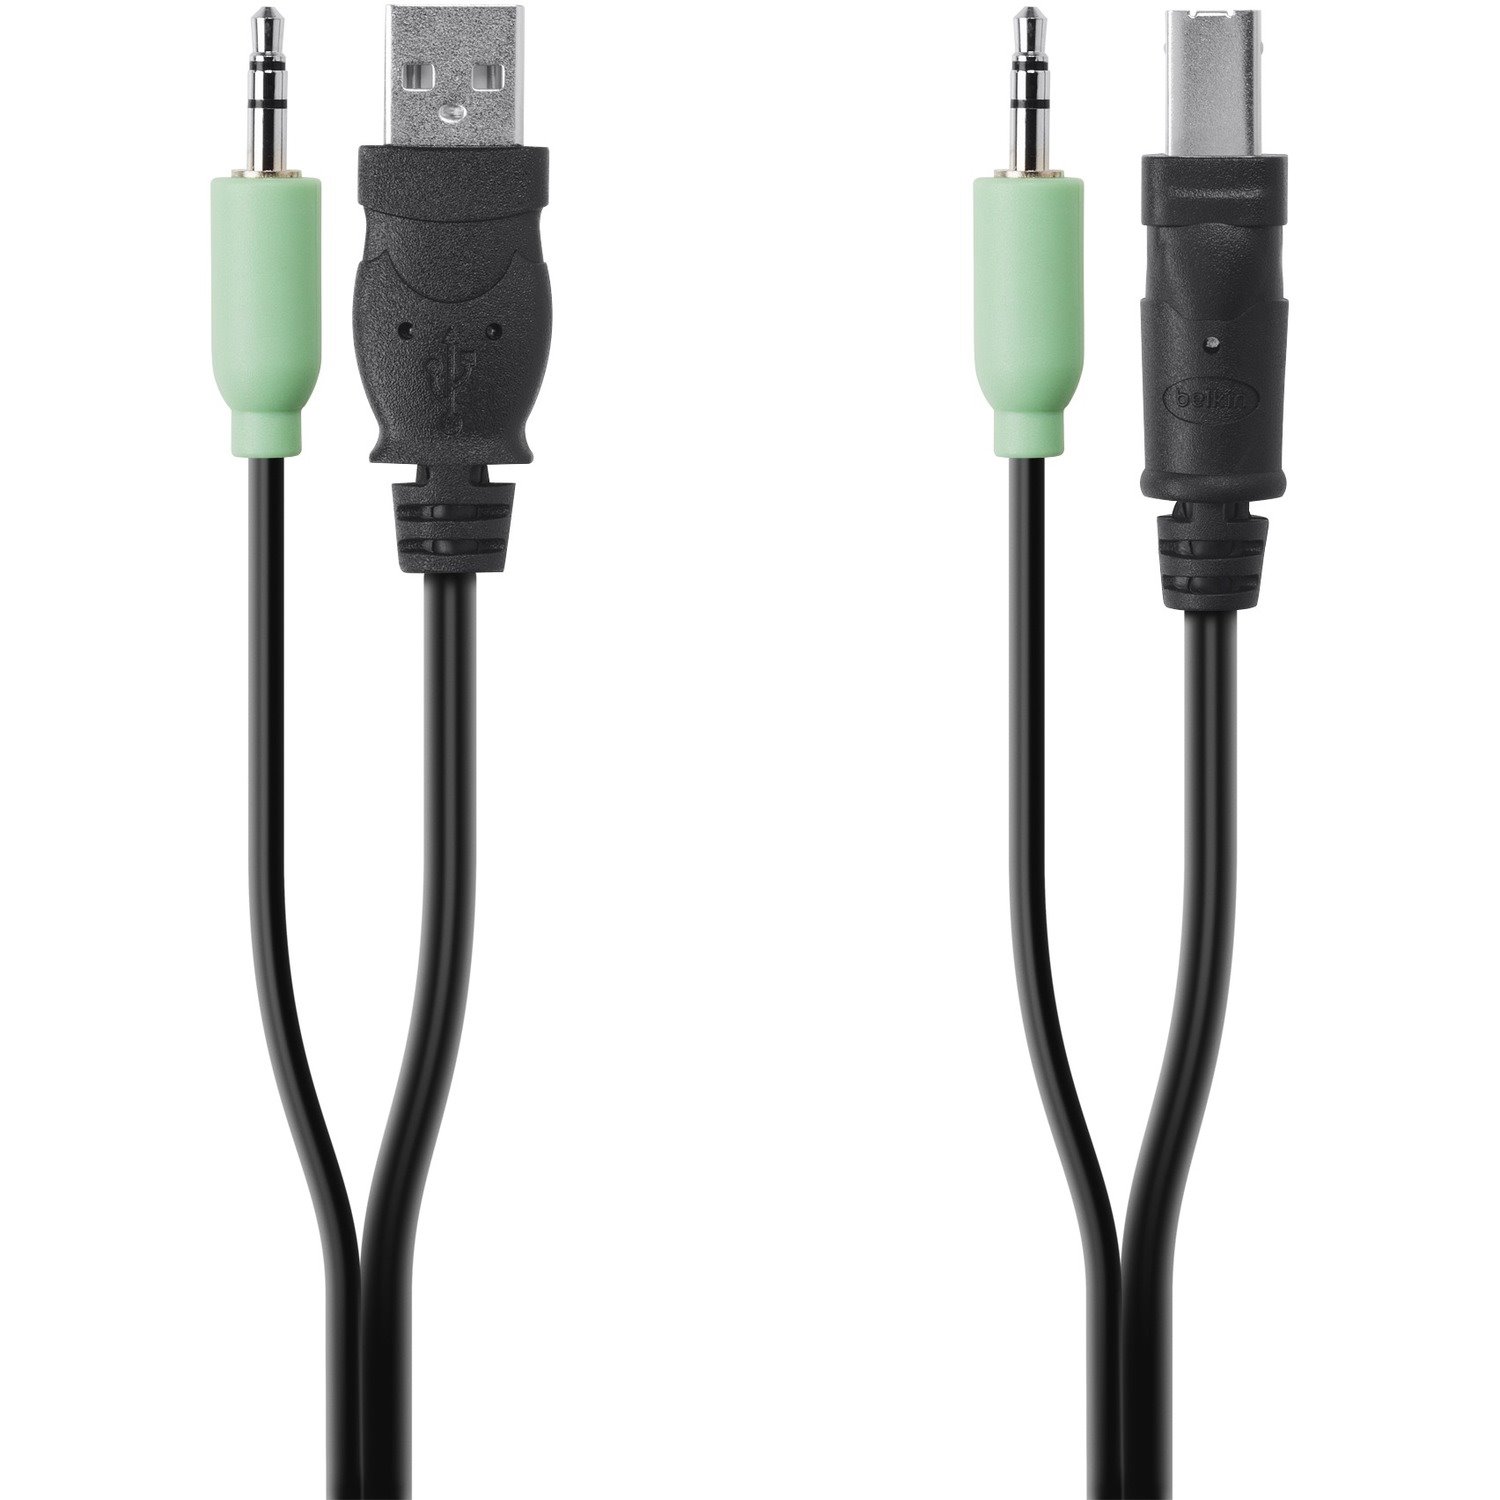 Belkin 1.83 m KVM Cable for KVM Switch